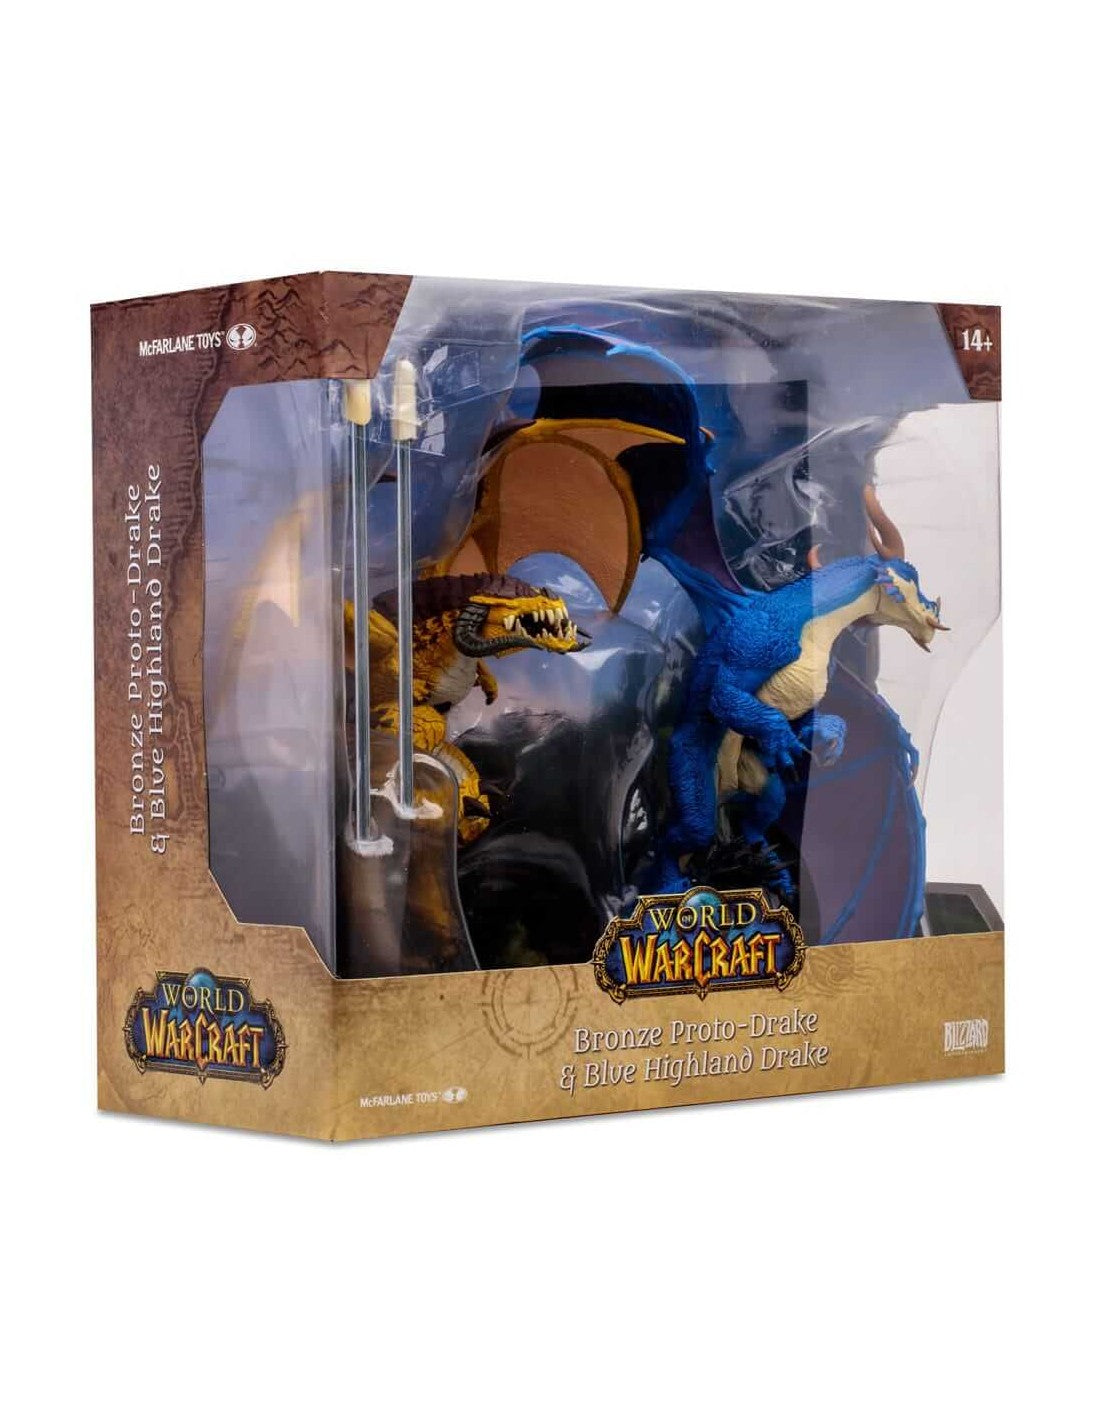 McFarlane Estatua: World Of Warcraft - Set Bronze Proto Drake y Blue Highland 2 Pack